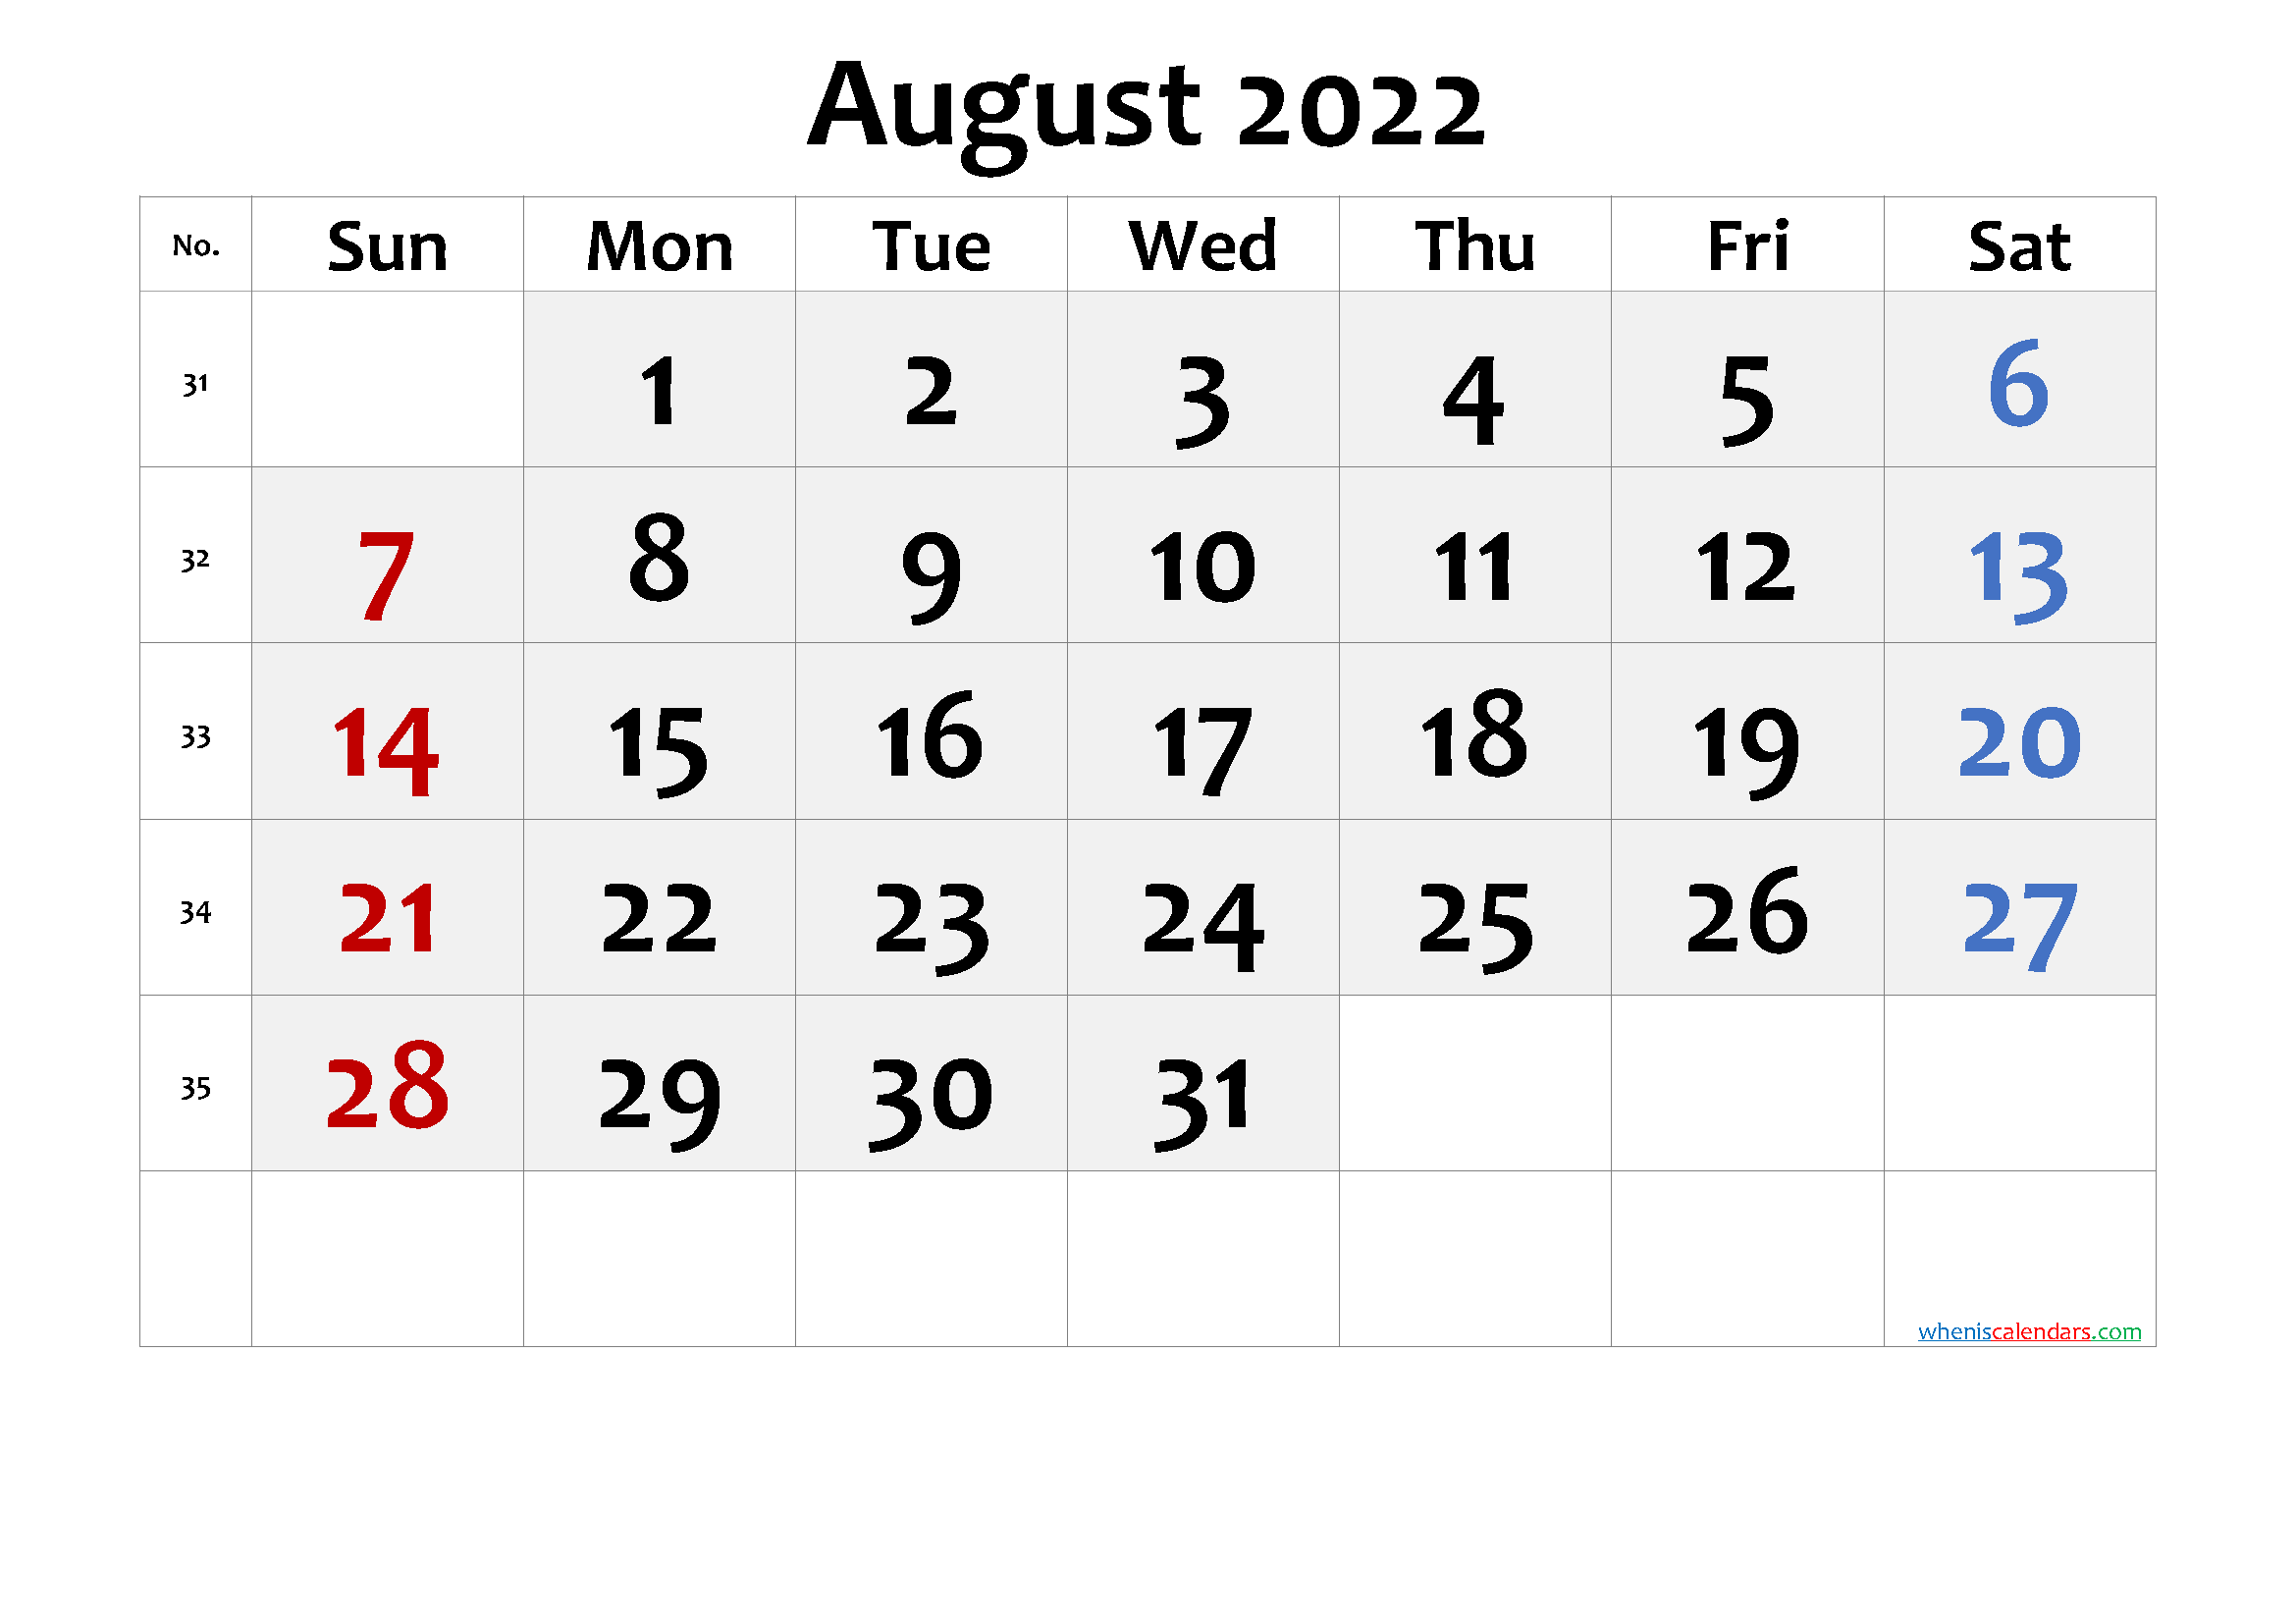 blank-august-calendar-2022-editable-whatisthedatetoday-com